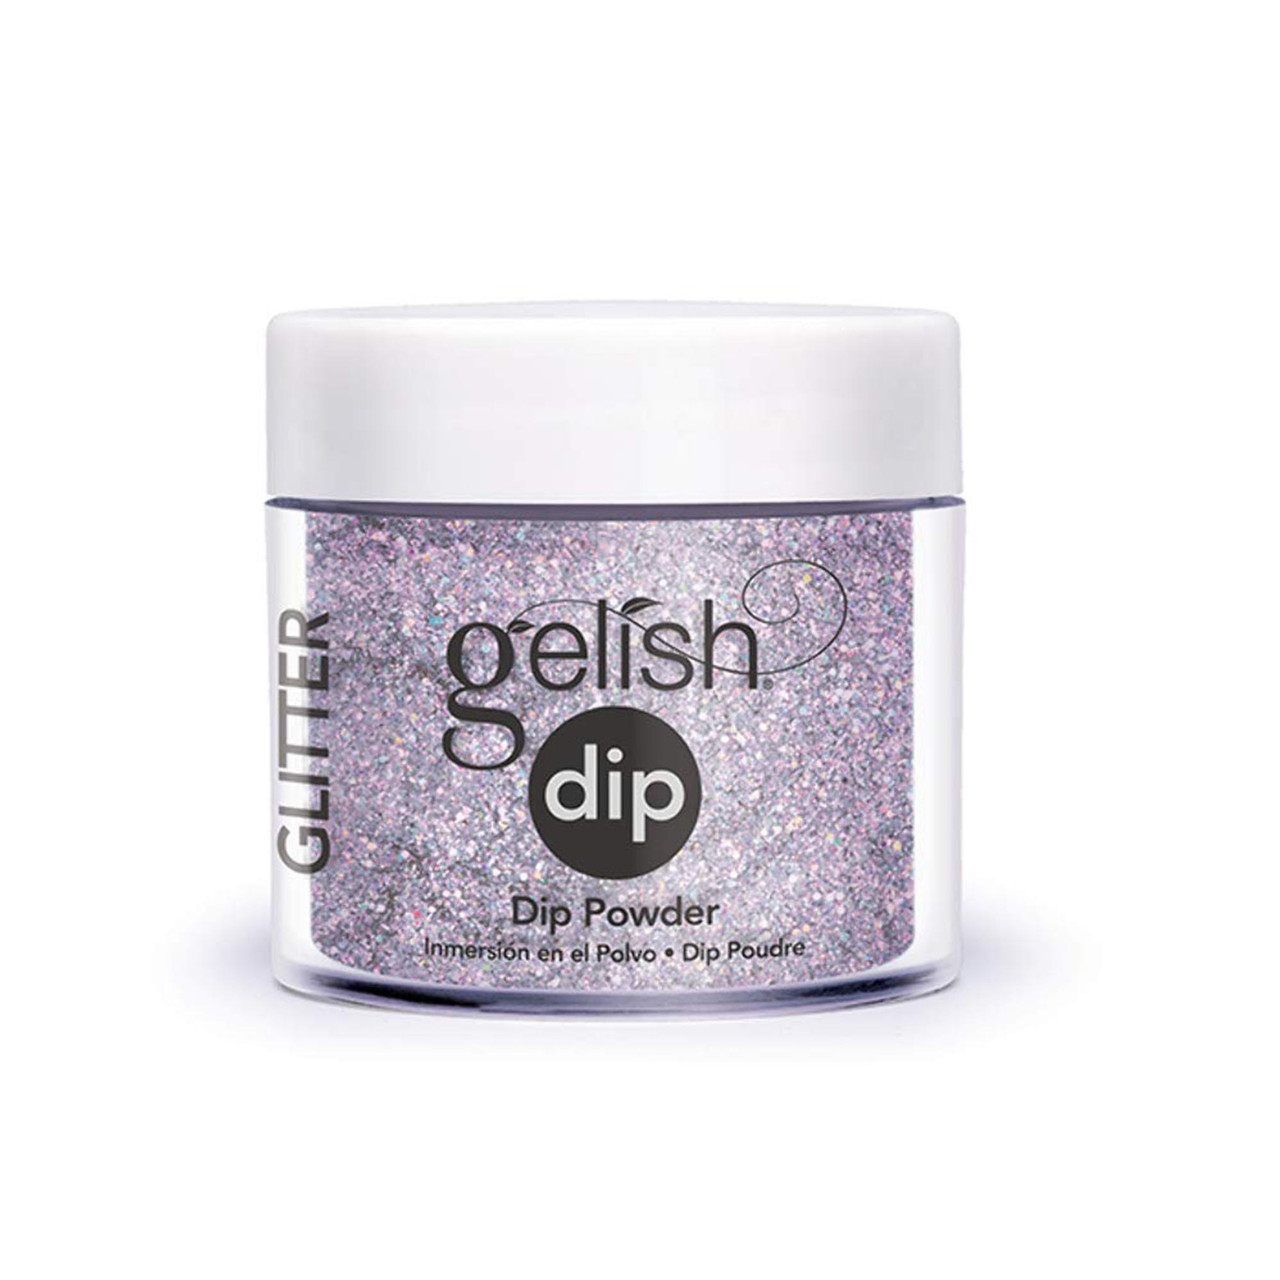 Gelish Dip Powder - 1610095 - Make A Statement